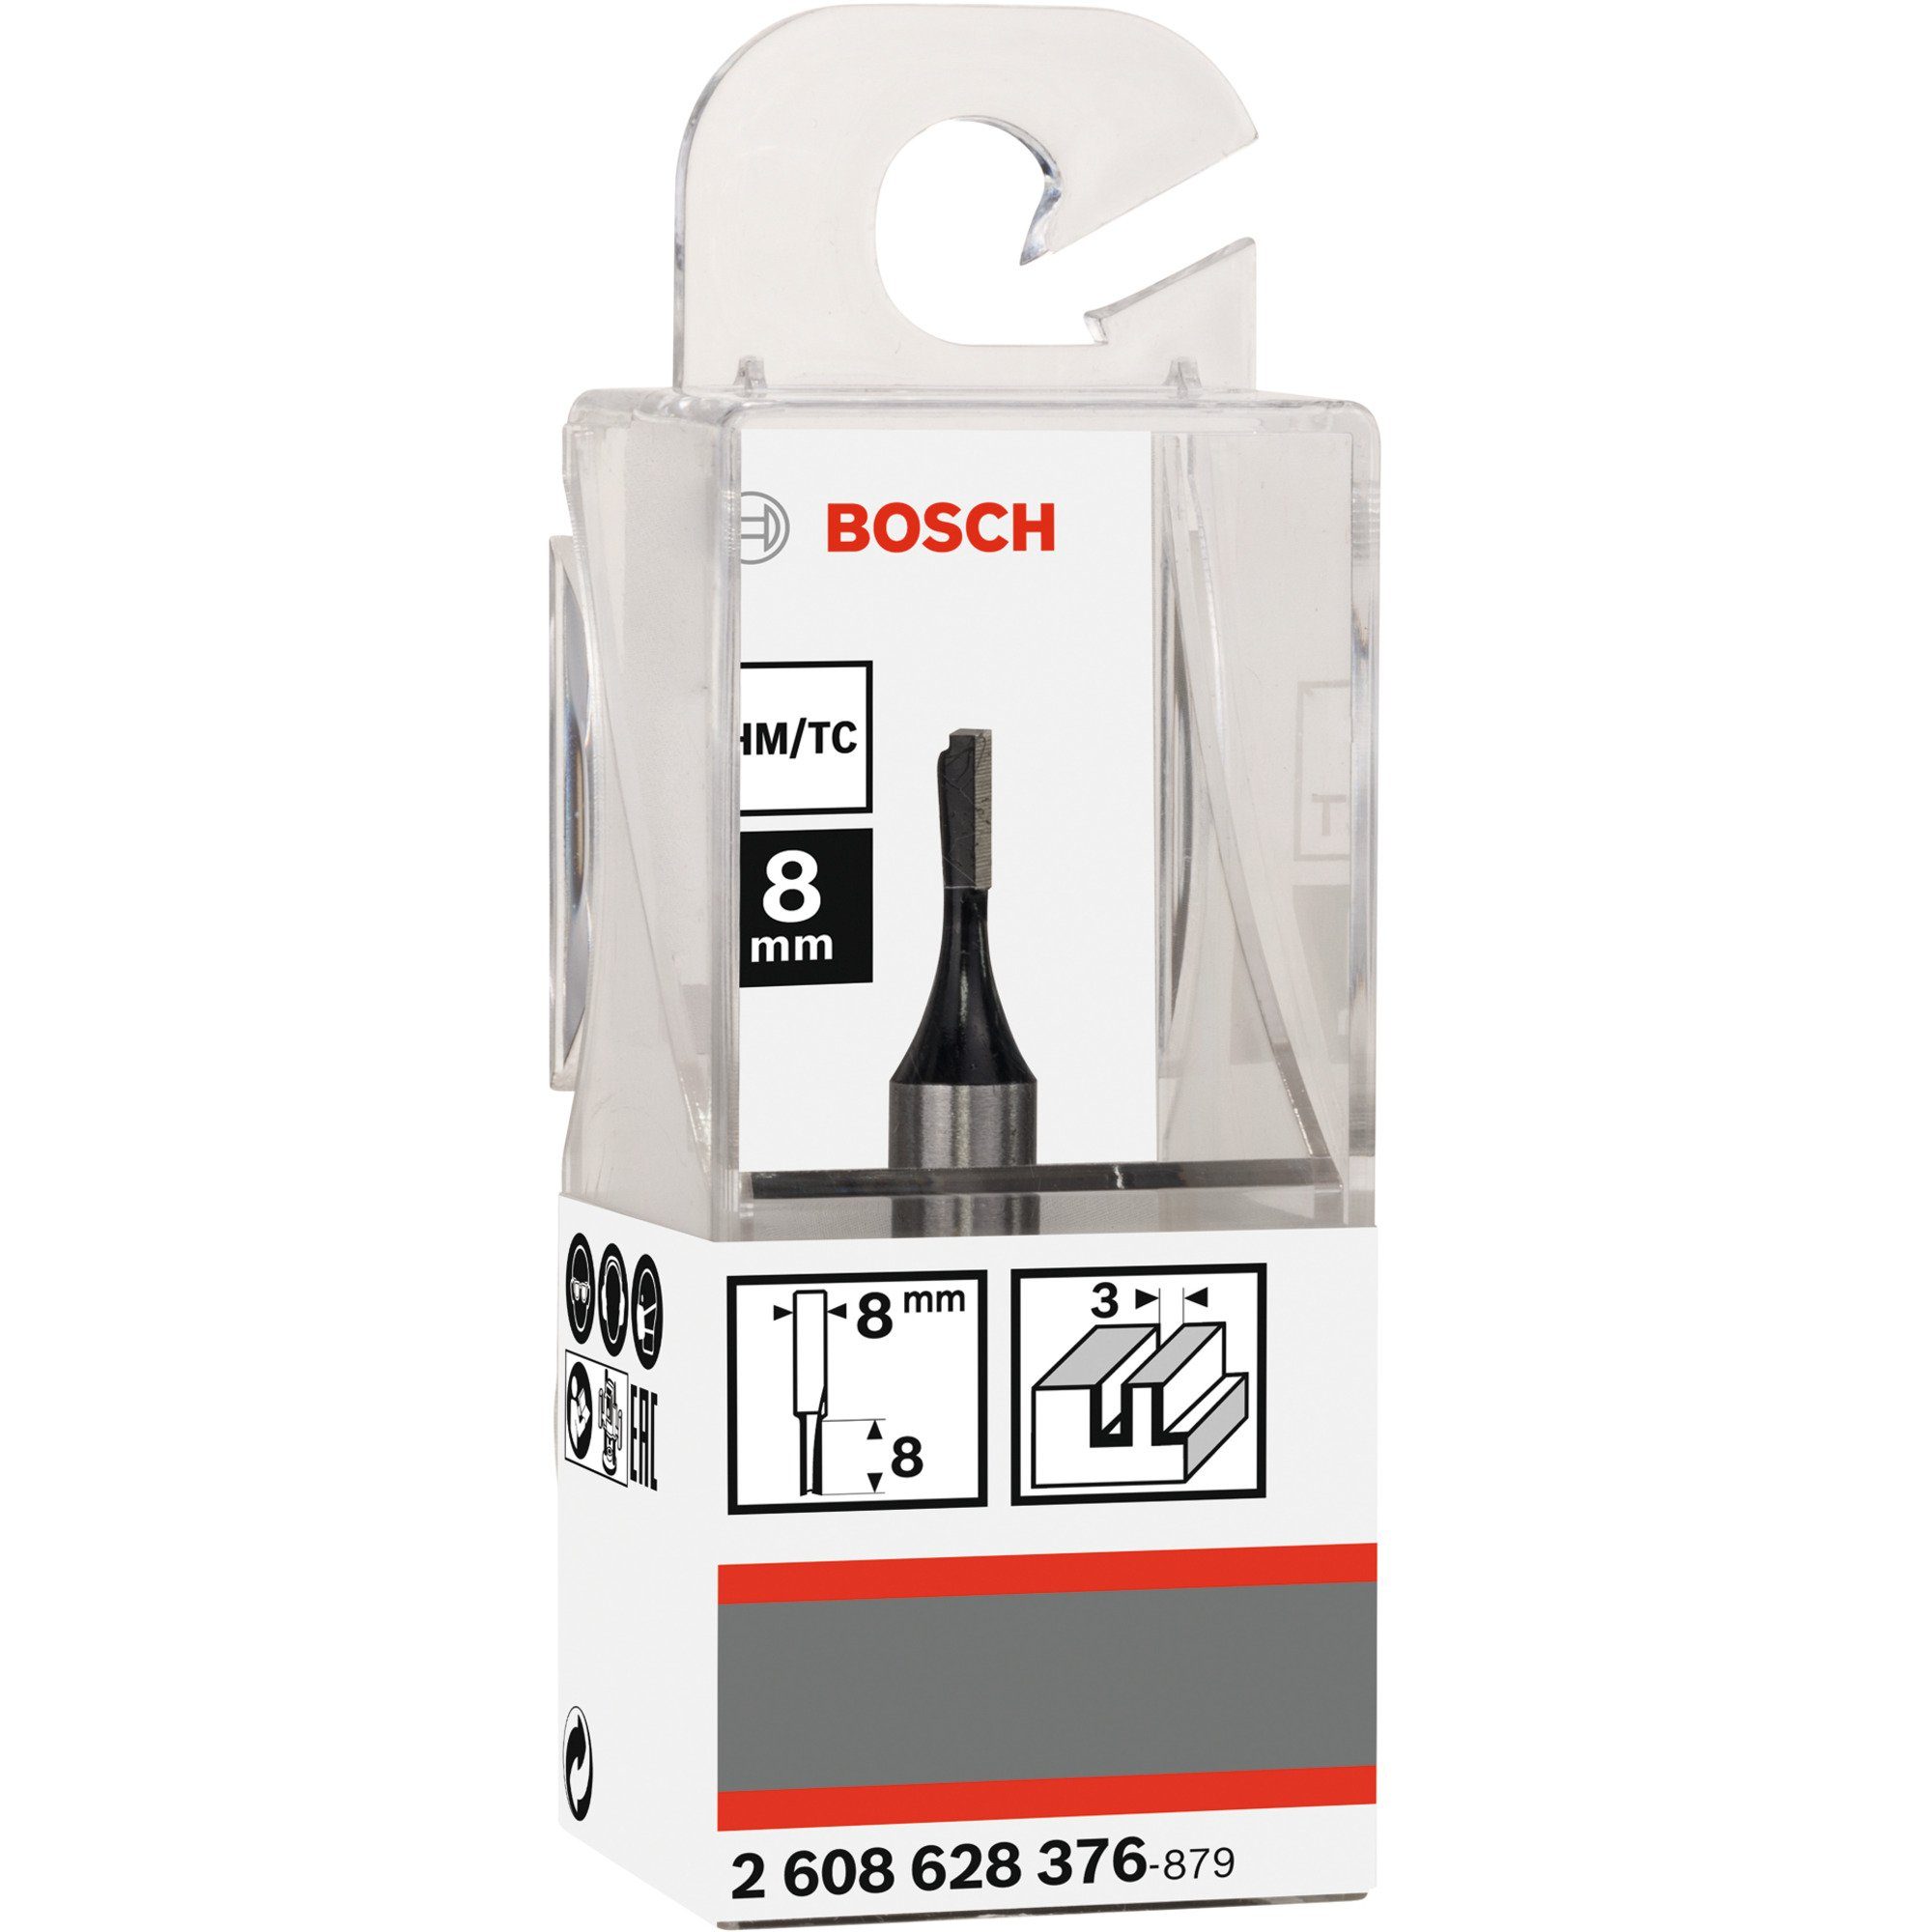 BOSCH Fräse Bosch Professional Nutfräser Ø for Wood, Standard